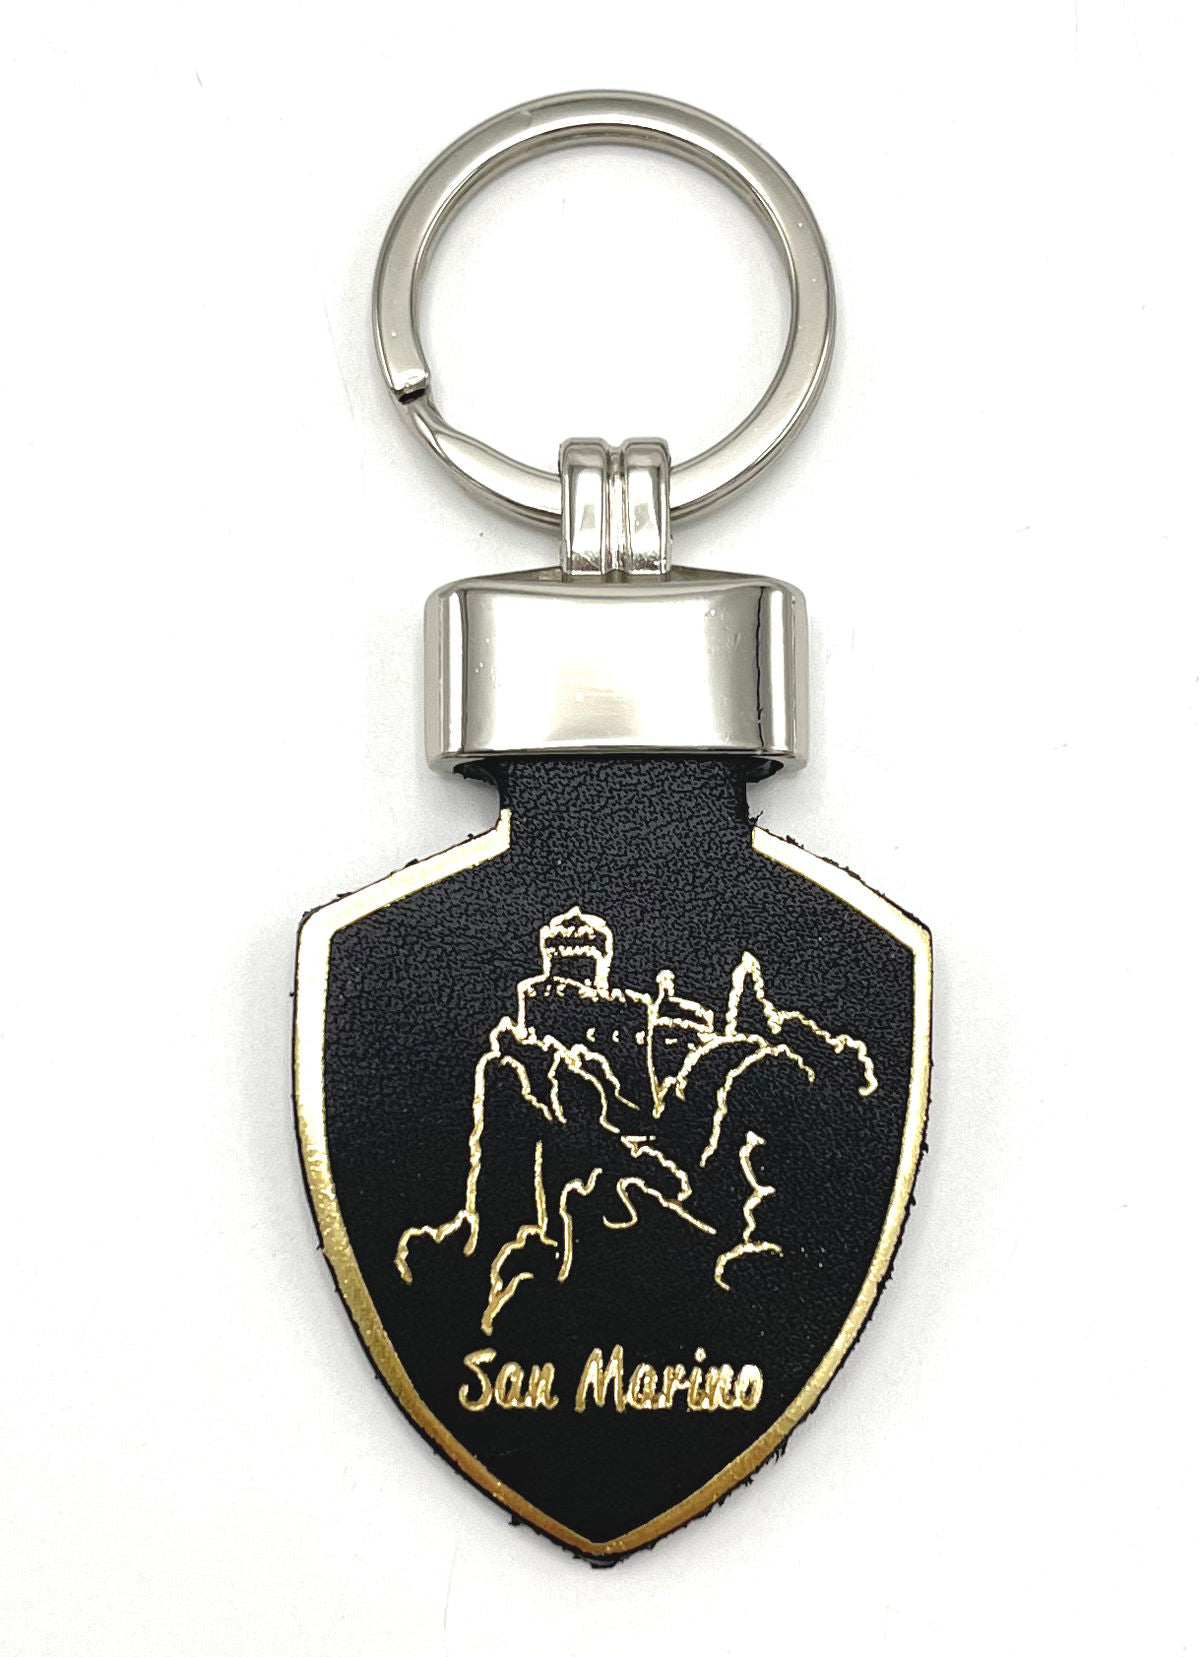 Genuine leather Keychain, Made in Italy, art. KSanMarino